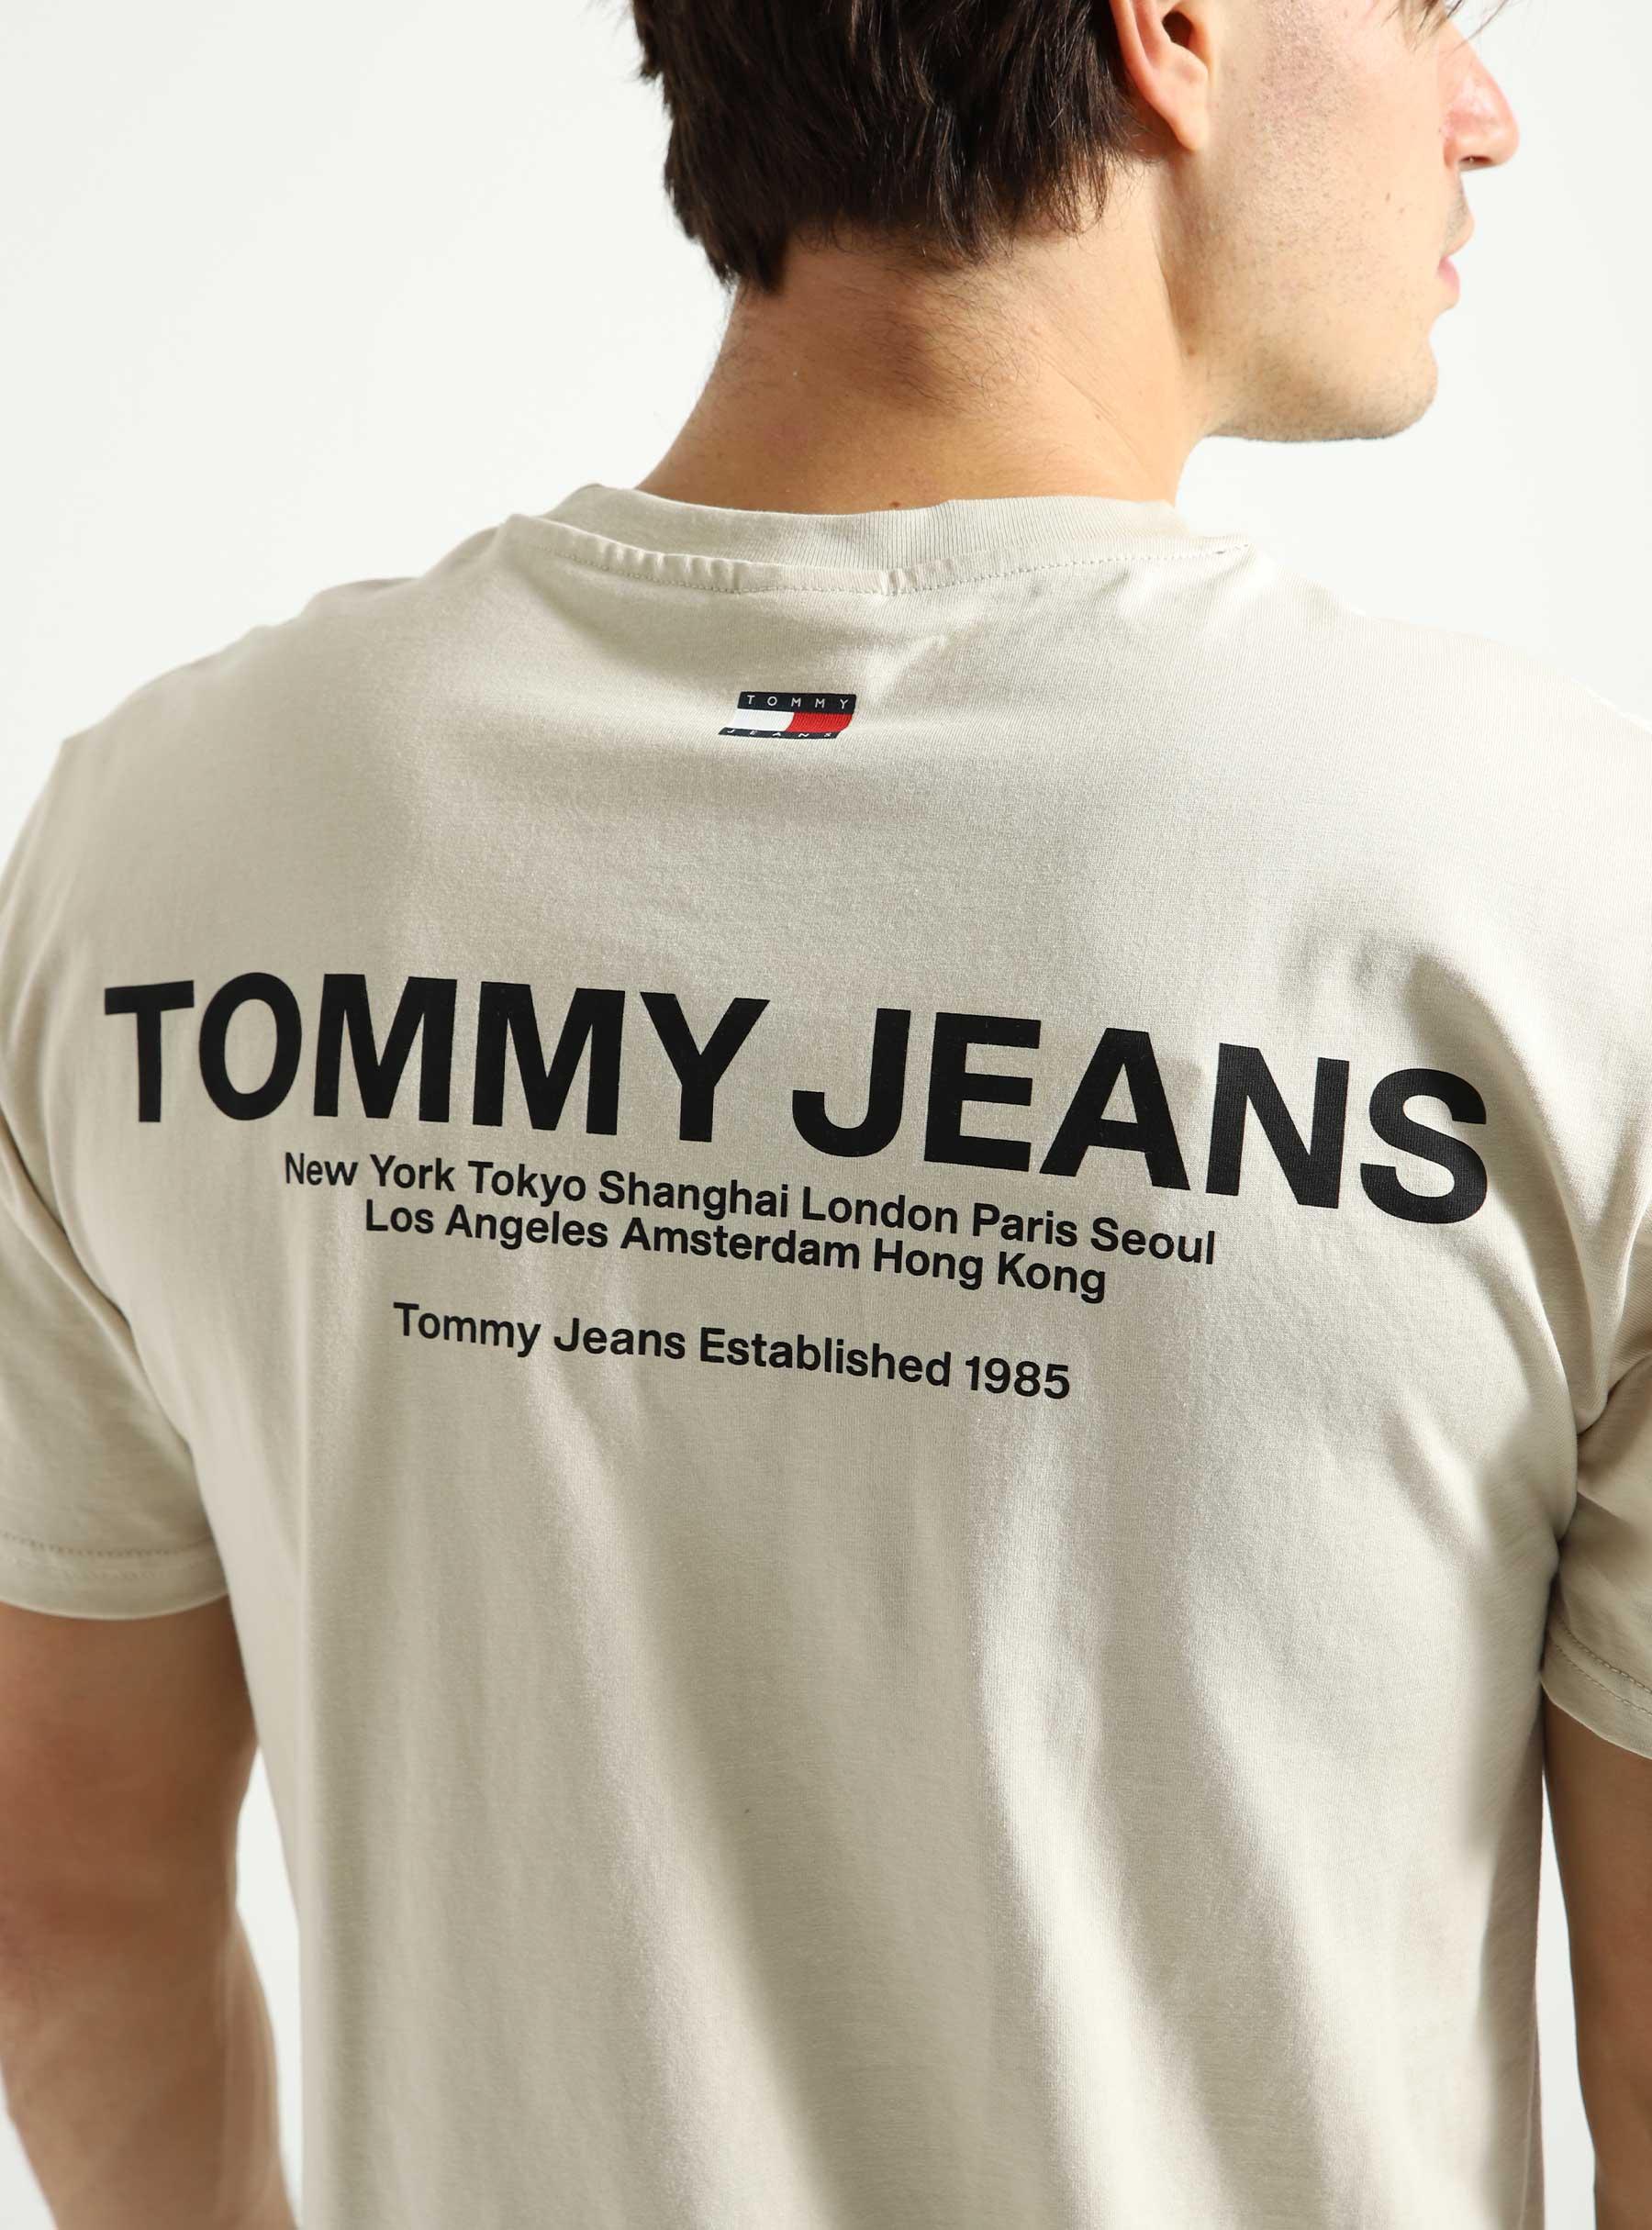 Tommy Jeans Classic Linear Back Print T-shirt Newsprint - Freshcotton